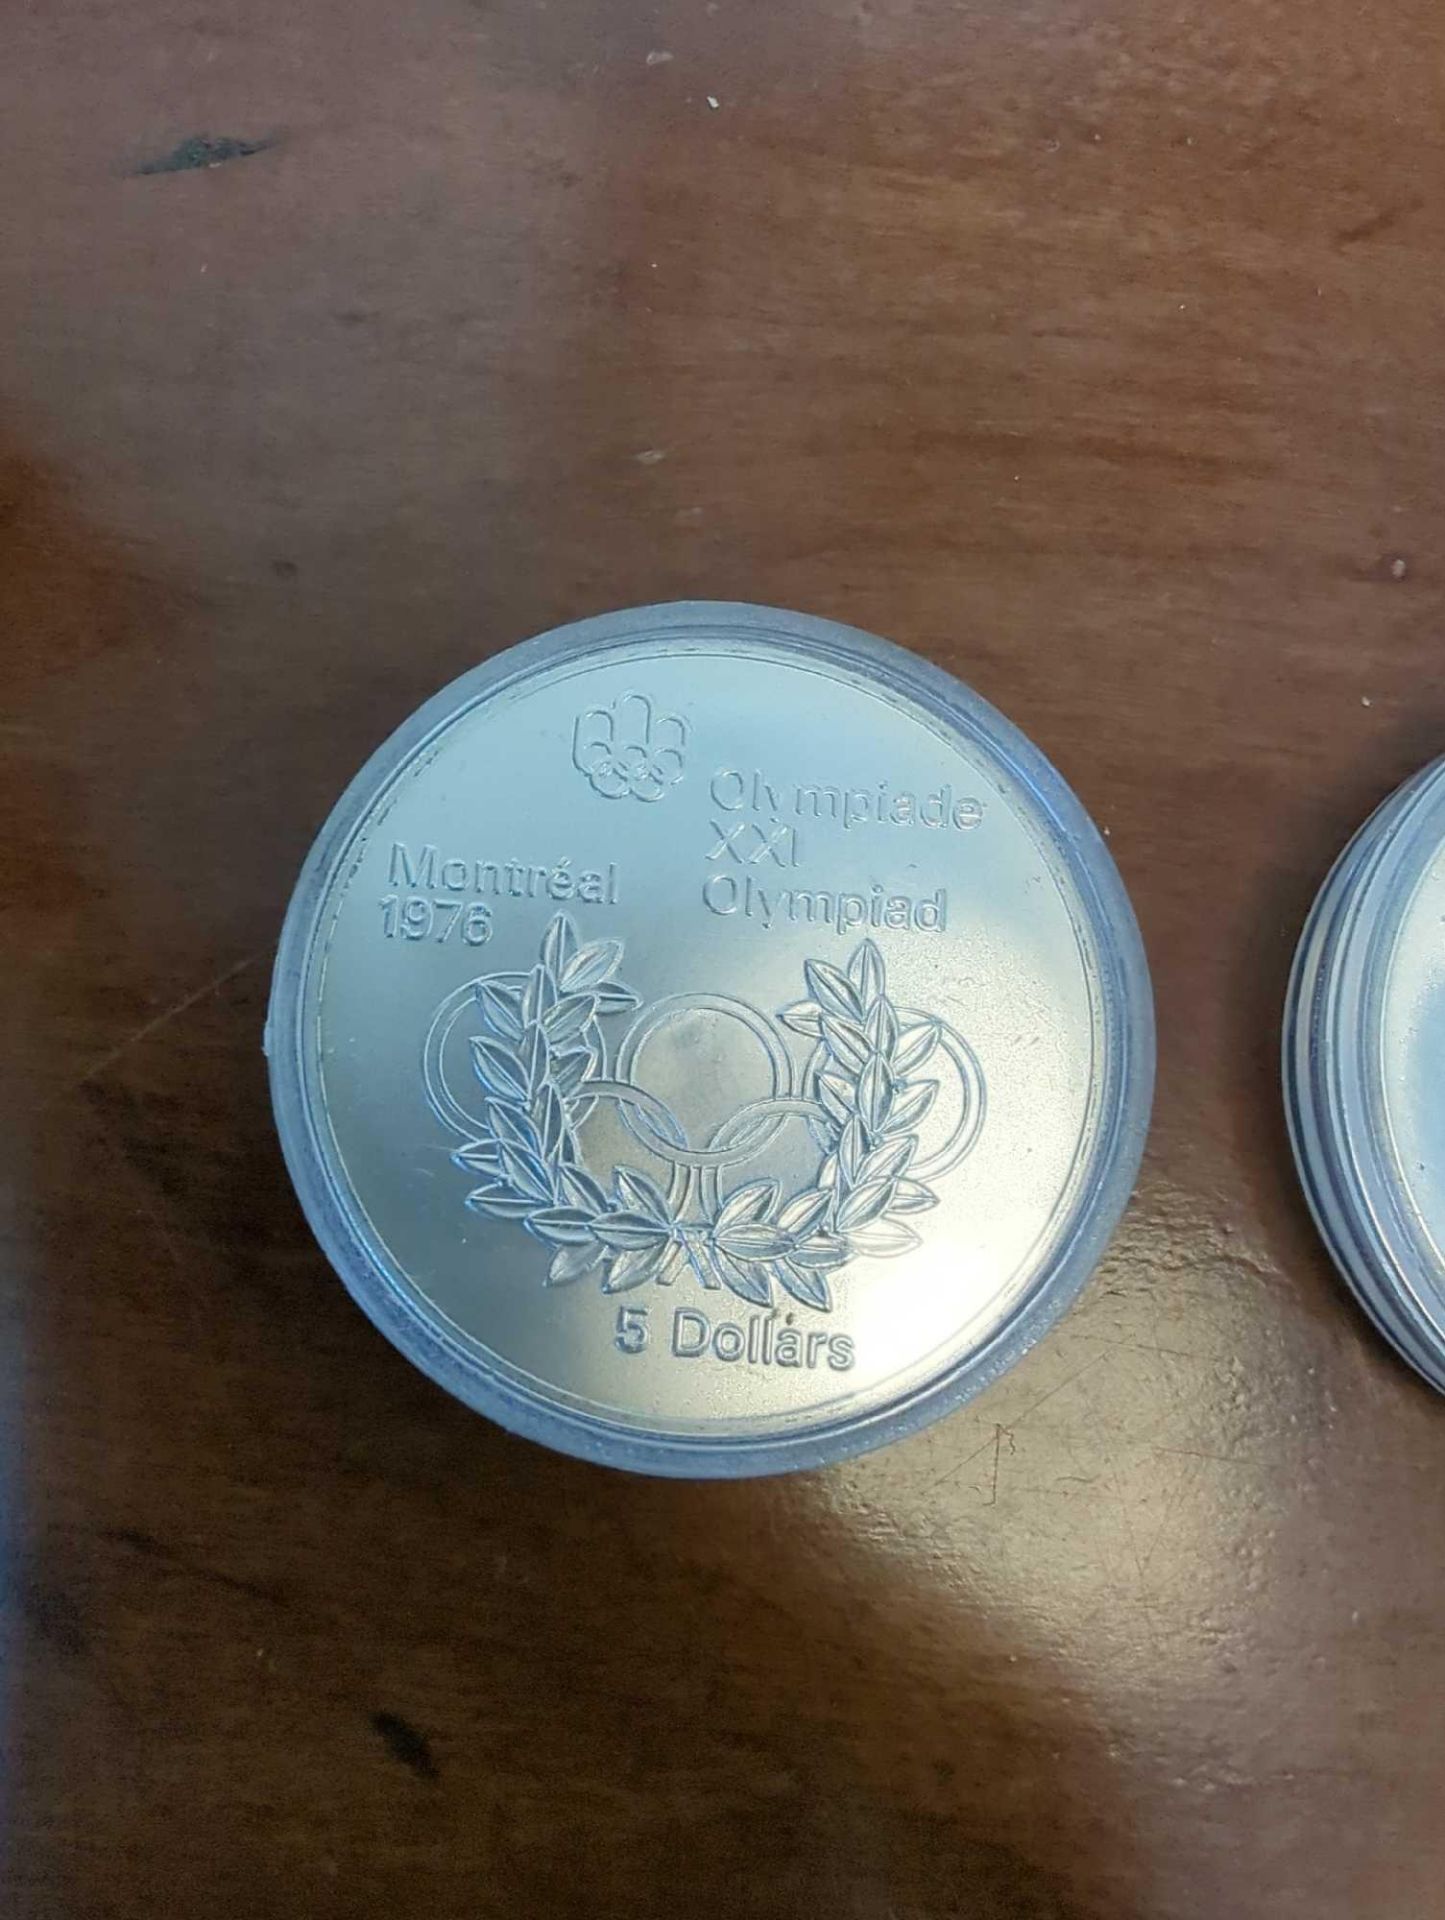 2 1974 Queen Elizabeth Olympics Silver 5 dollar coins - Image 2 of 4